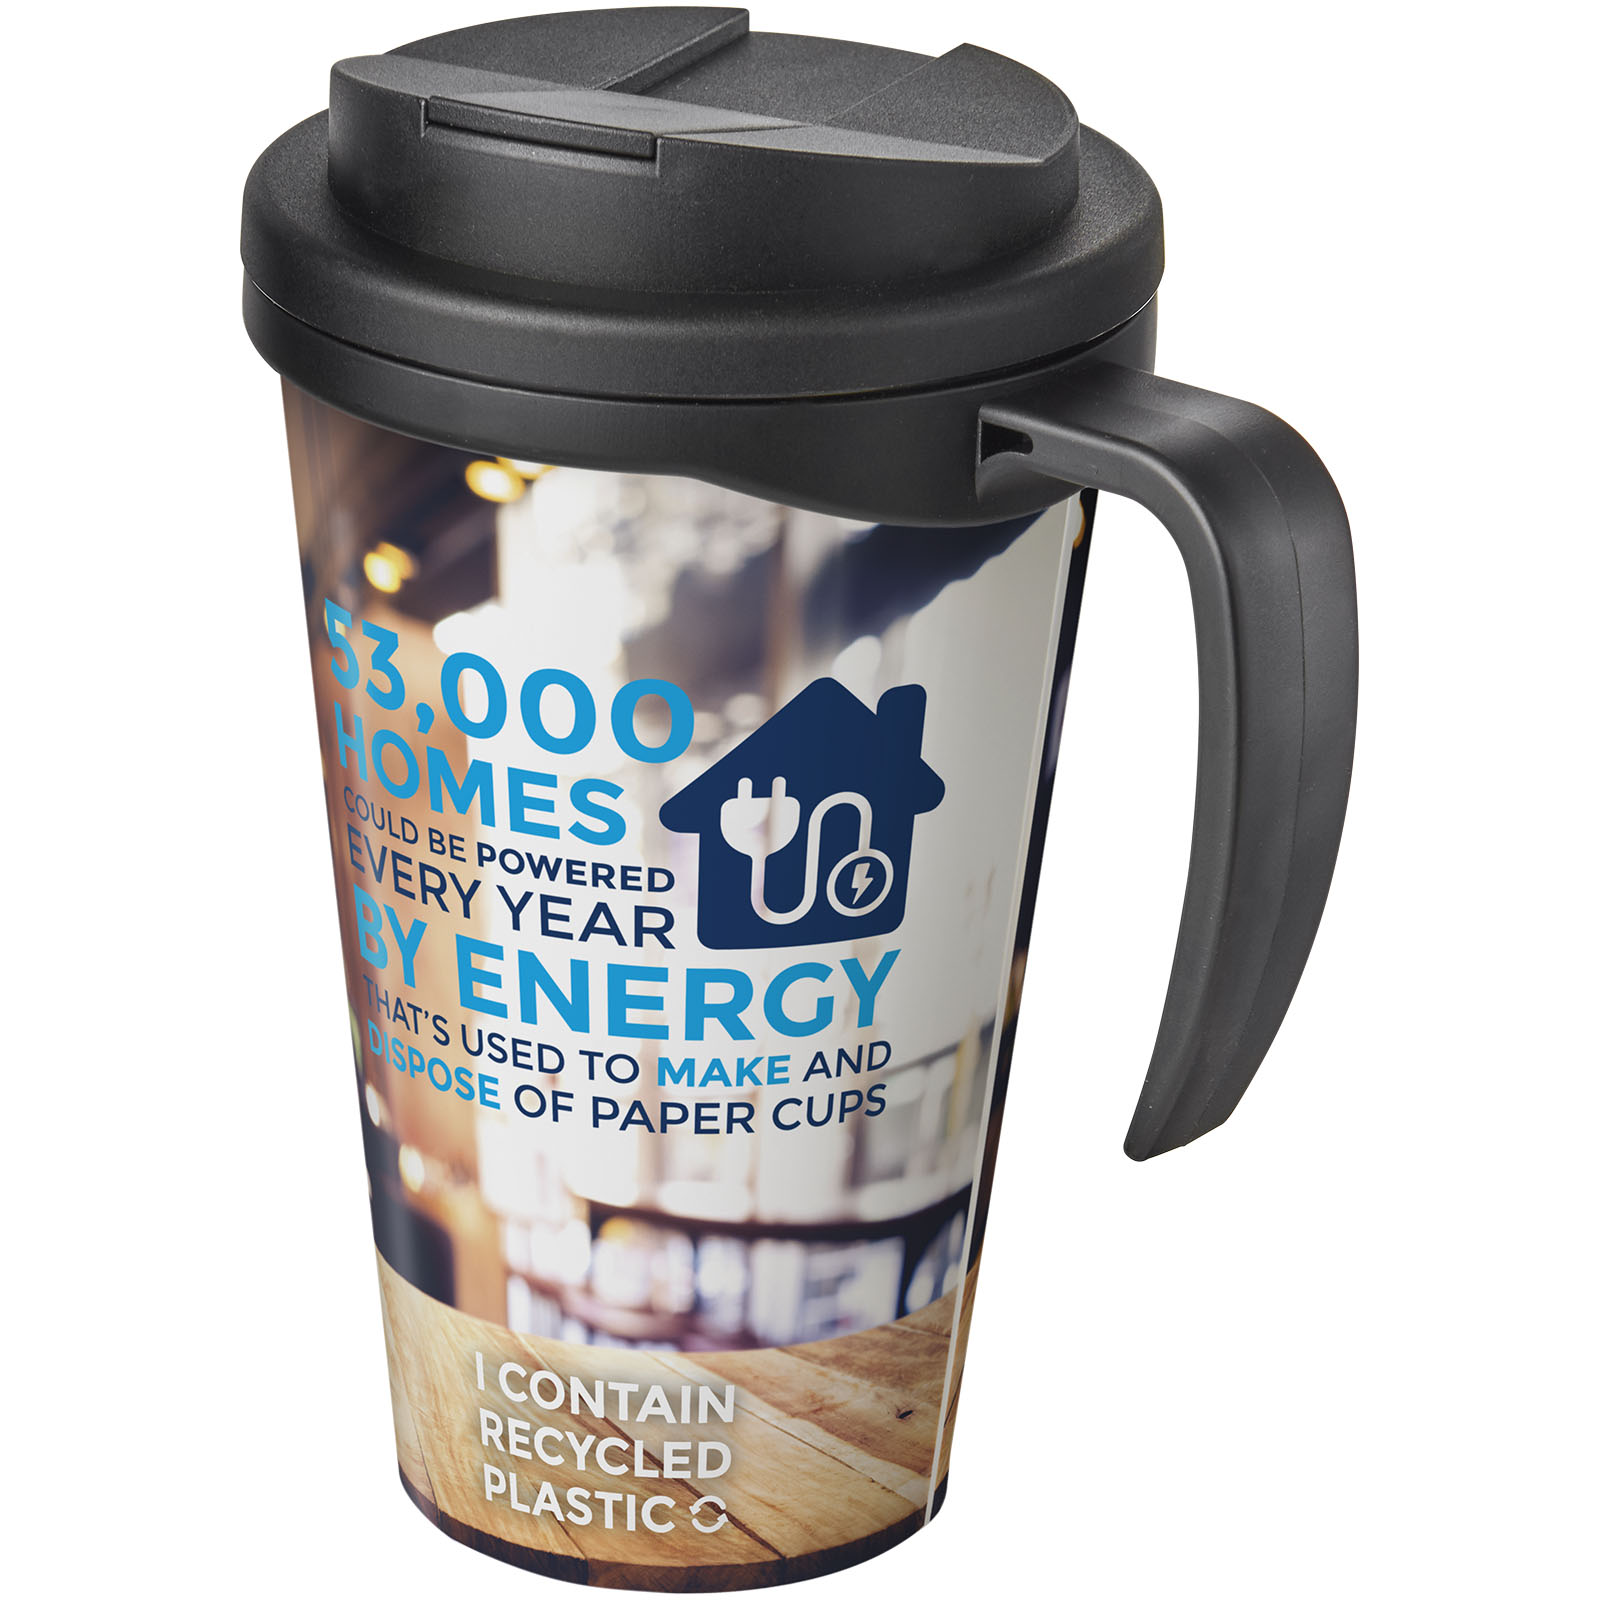 Travel mugs - Brite-Americano® Grande 350 ml mug with spill-proof lid